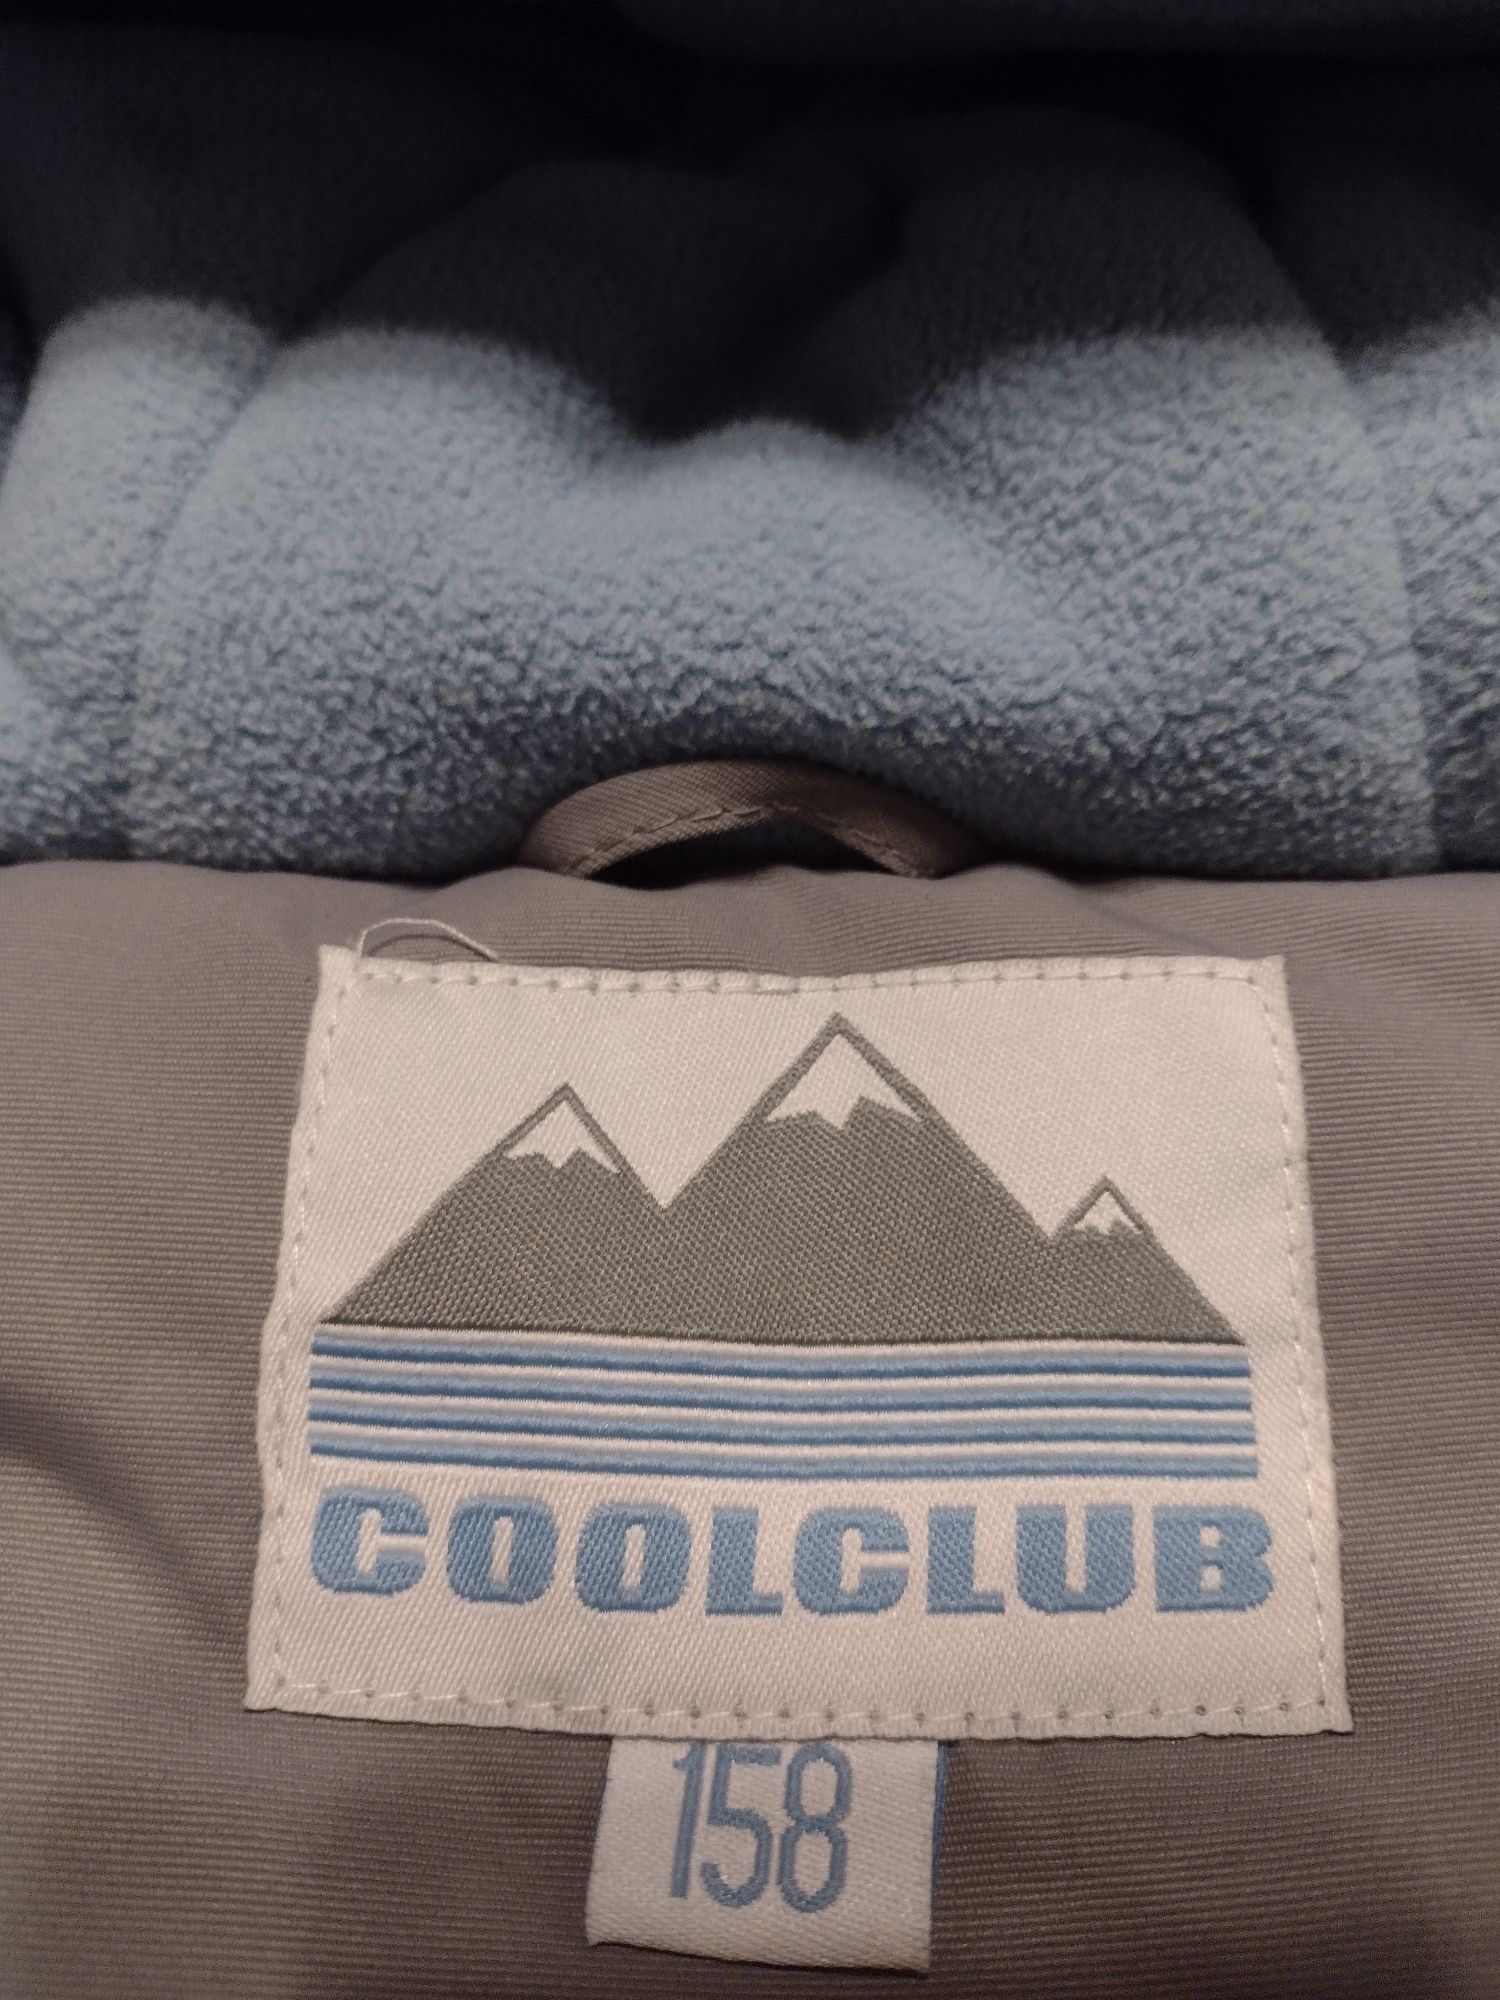 Kurtka narciarska Coolclub 158 zimowa